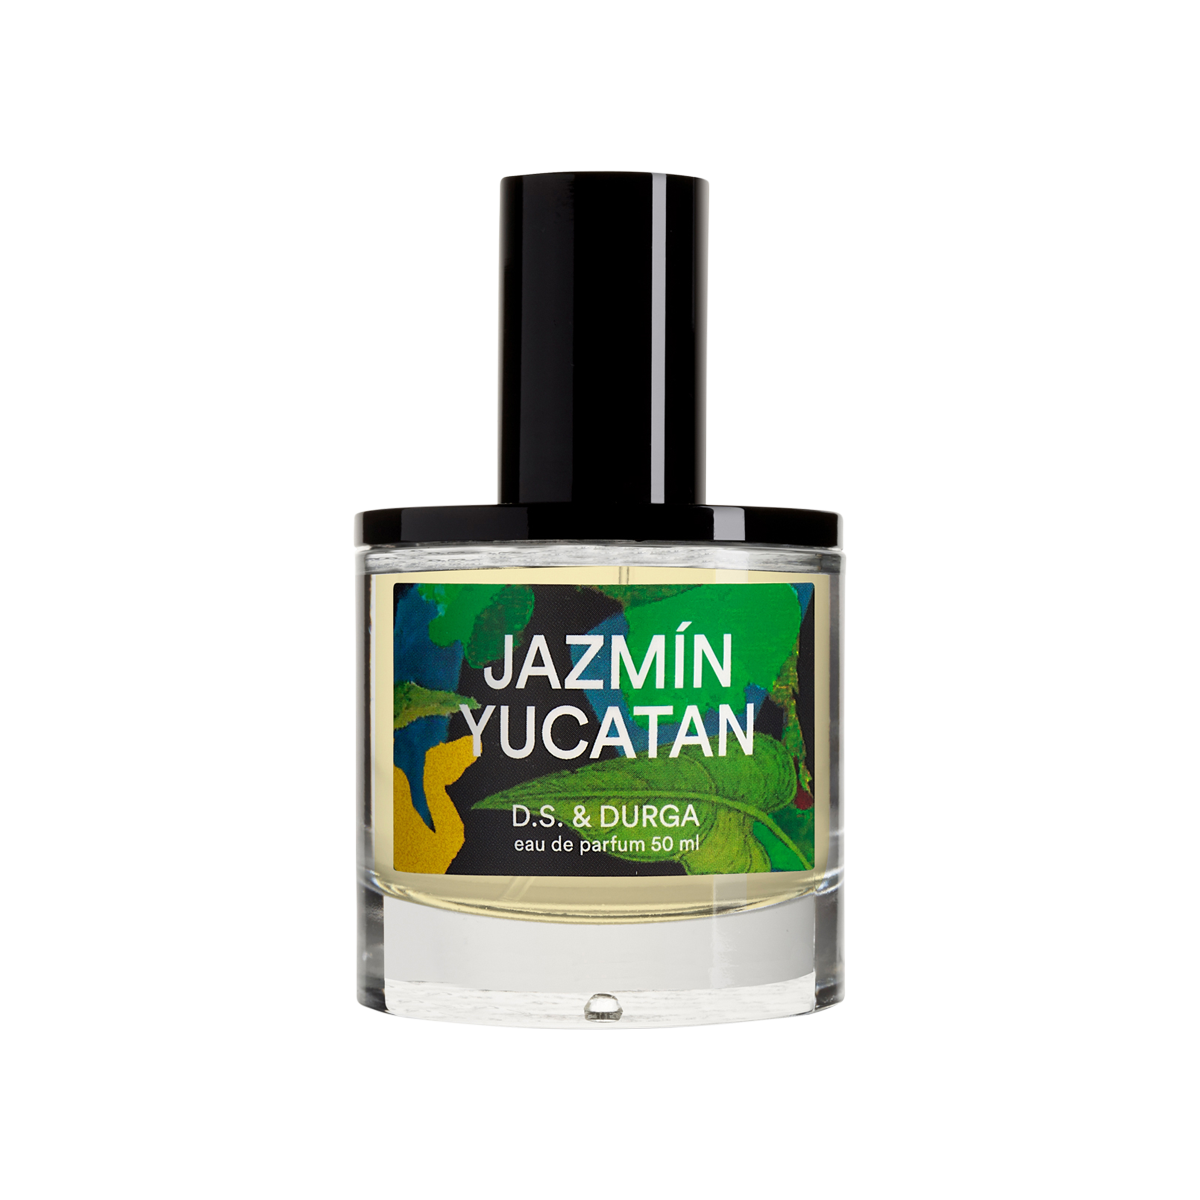 D.S. & DURGA - Jazmin Yucatan Eau de Parfum